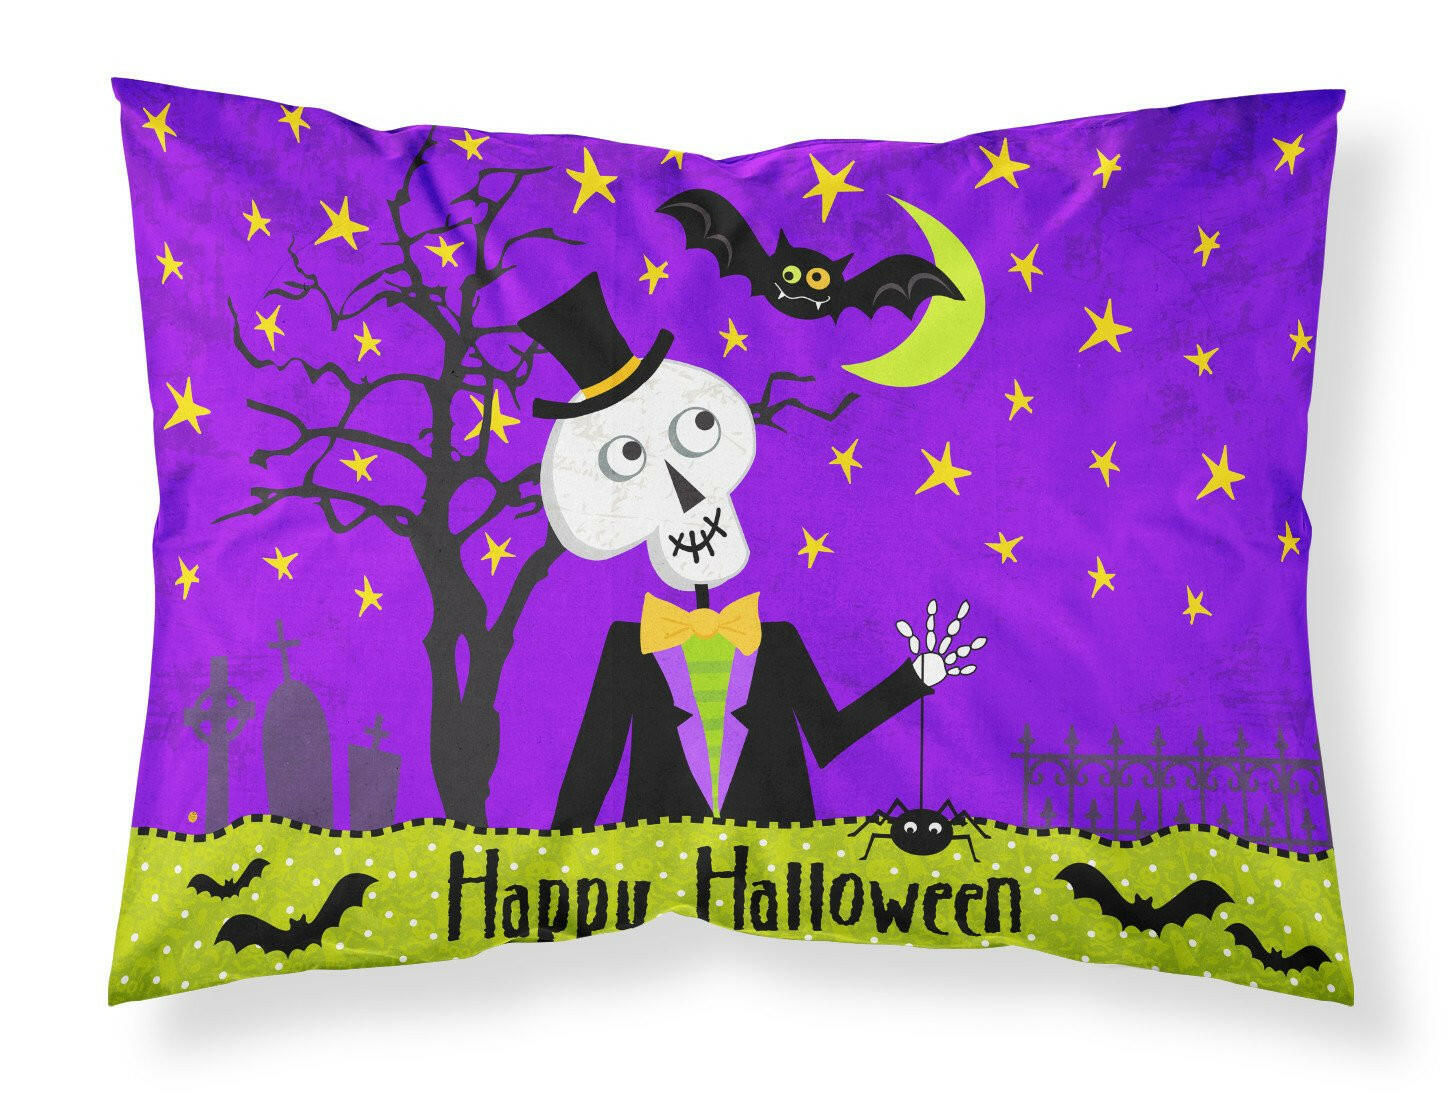 Happy Halloween Skeleton Fabric Standard Pillowcase VHA3014PILLOWCASE by Caroline's Treasures